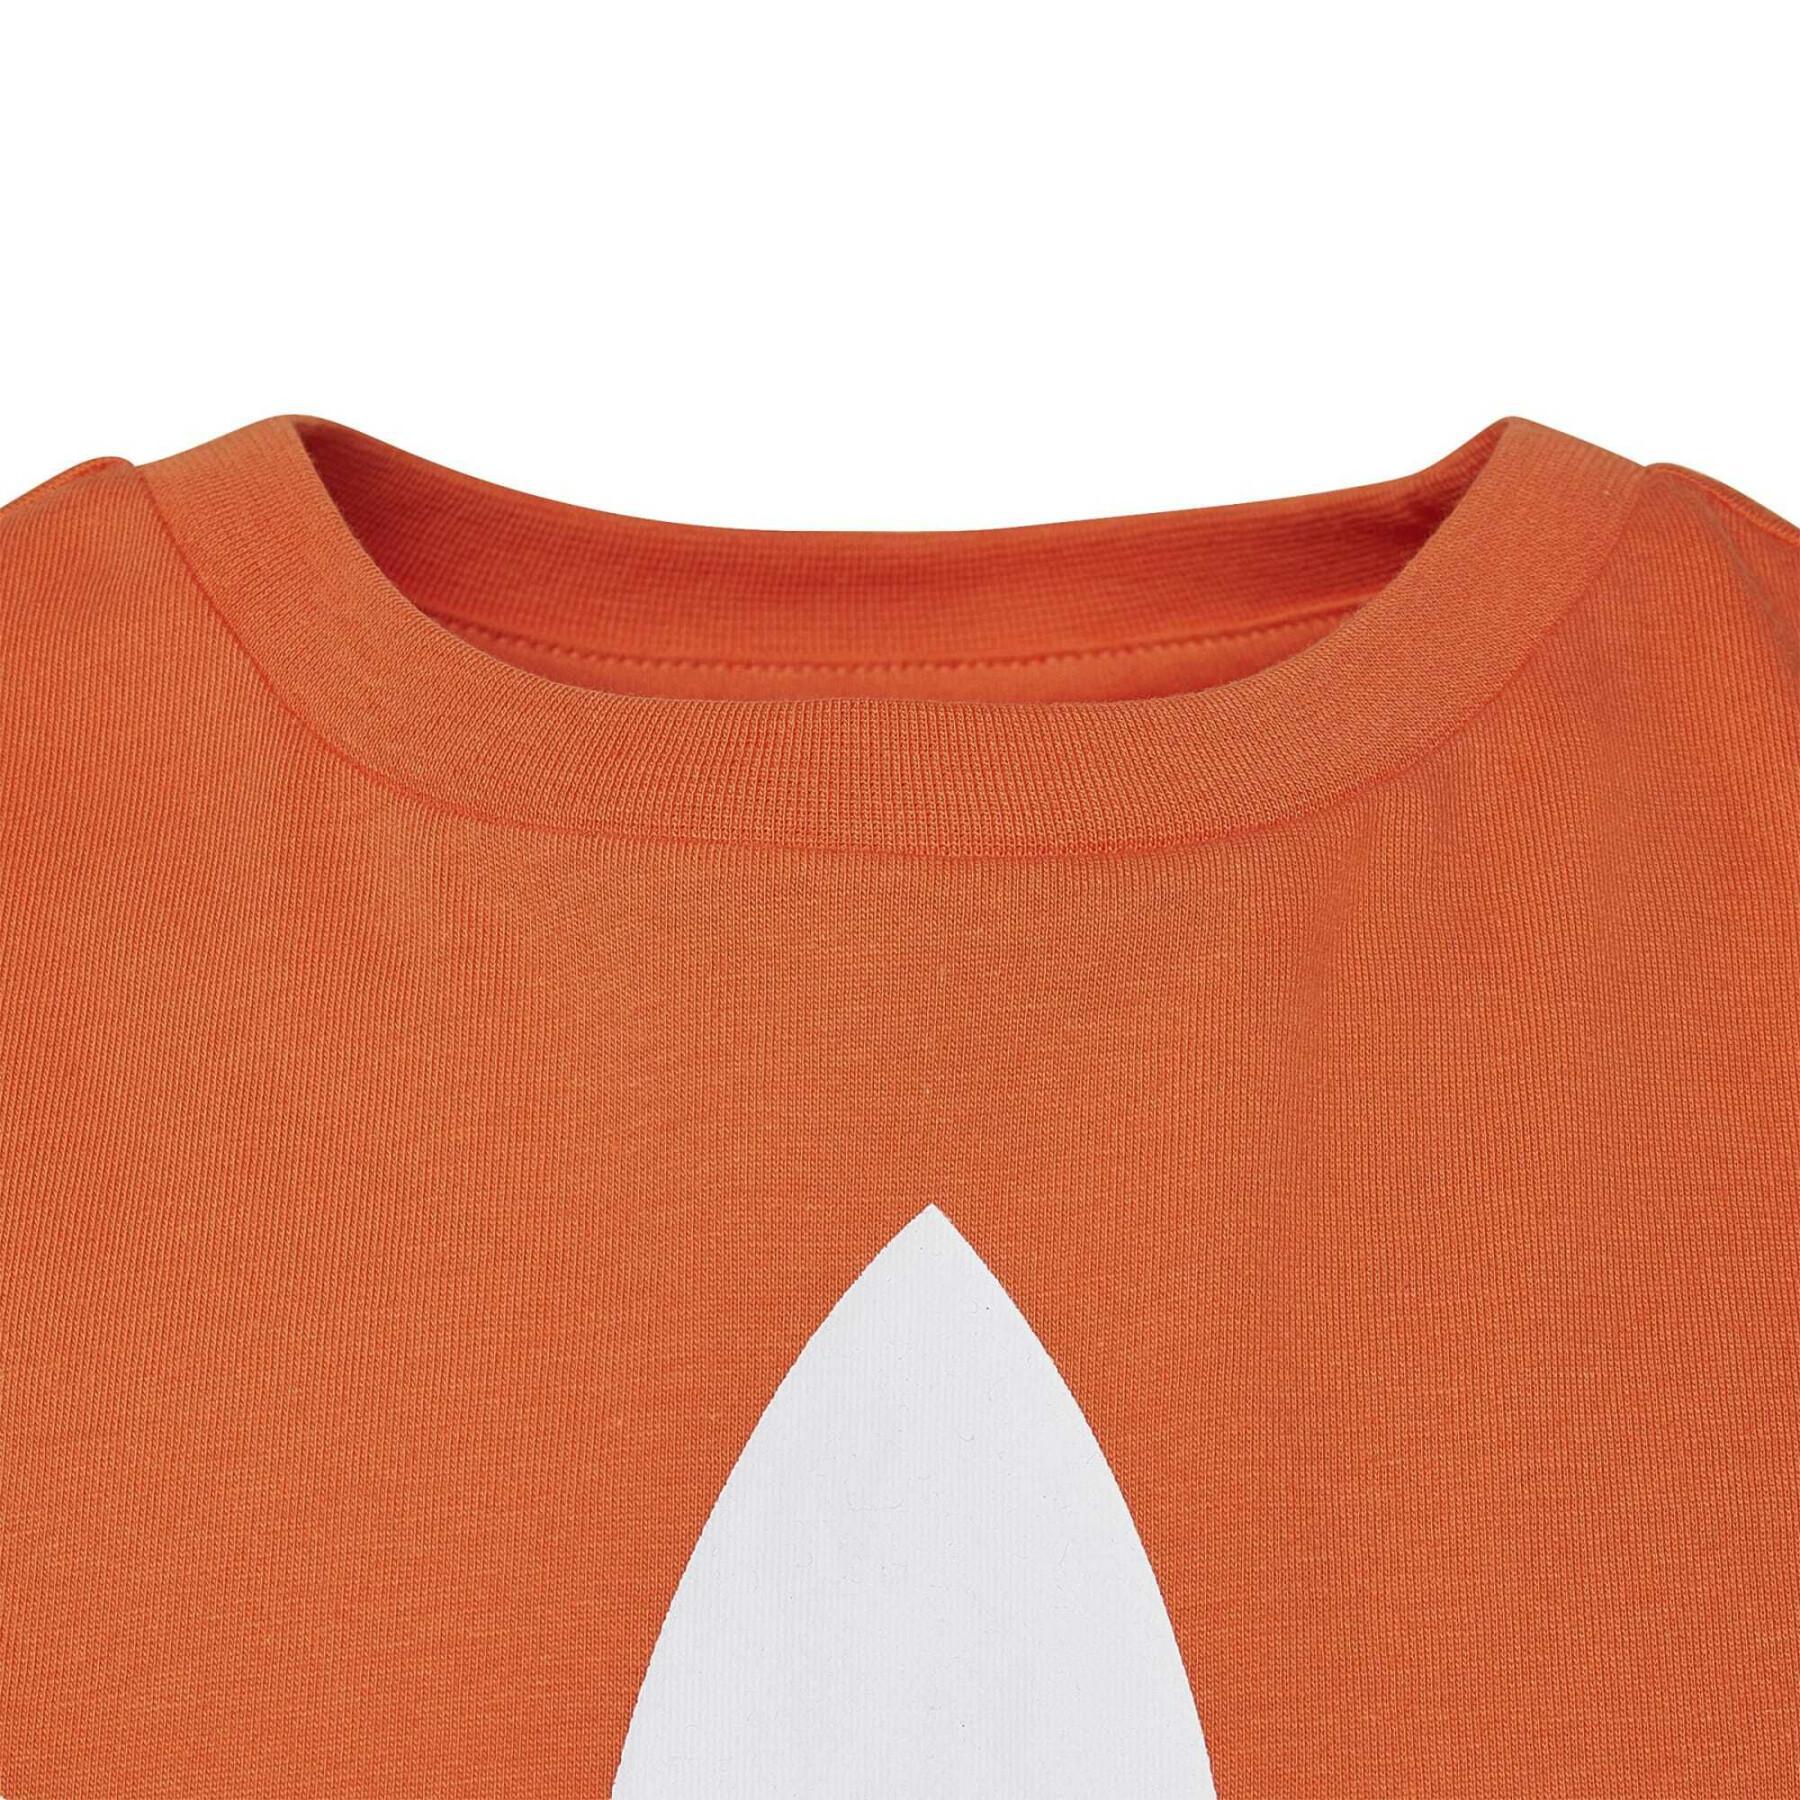 Child's T-shirt adidas Originals Trefoil